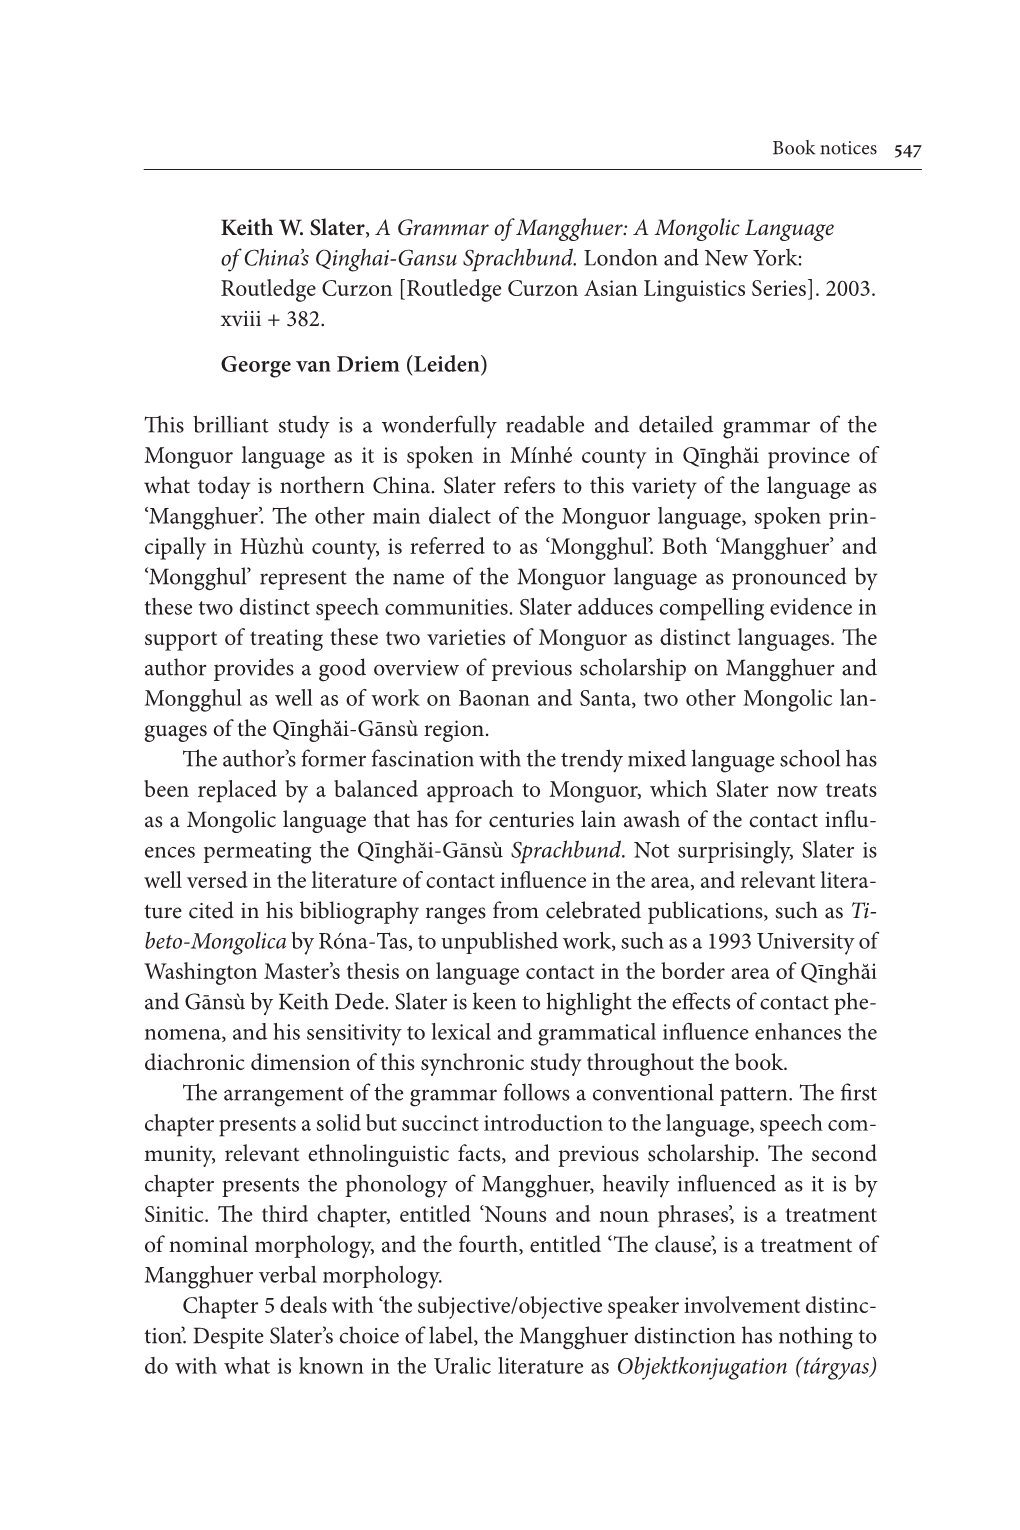 Keith W. Slater, a Grammar of Mangghuer: a Mongolic Language of China’S Qinghai-Gansu Sprachbund